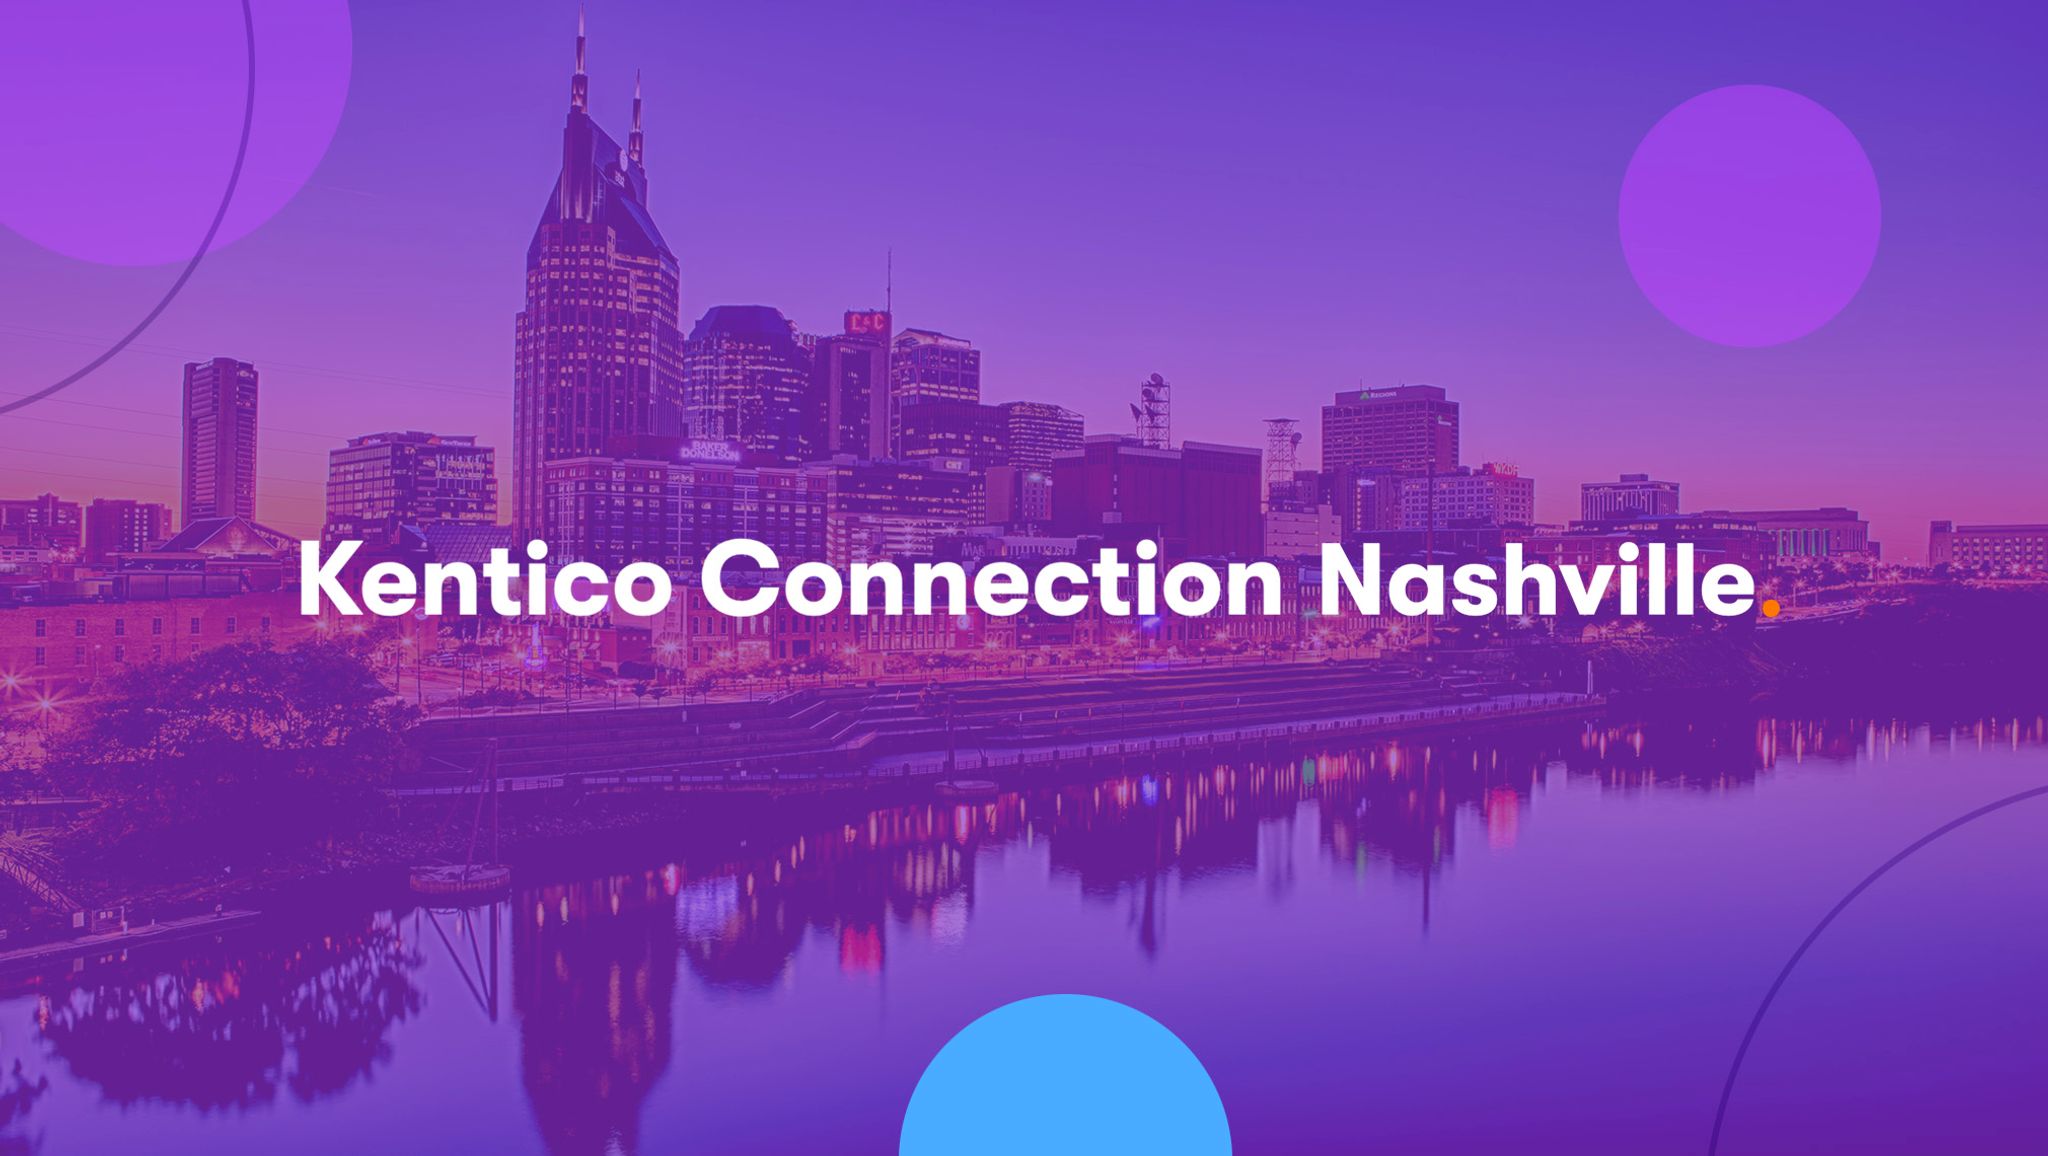 Downtown Nashville skyline with Kentico Connection Nashville text overlayed